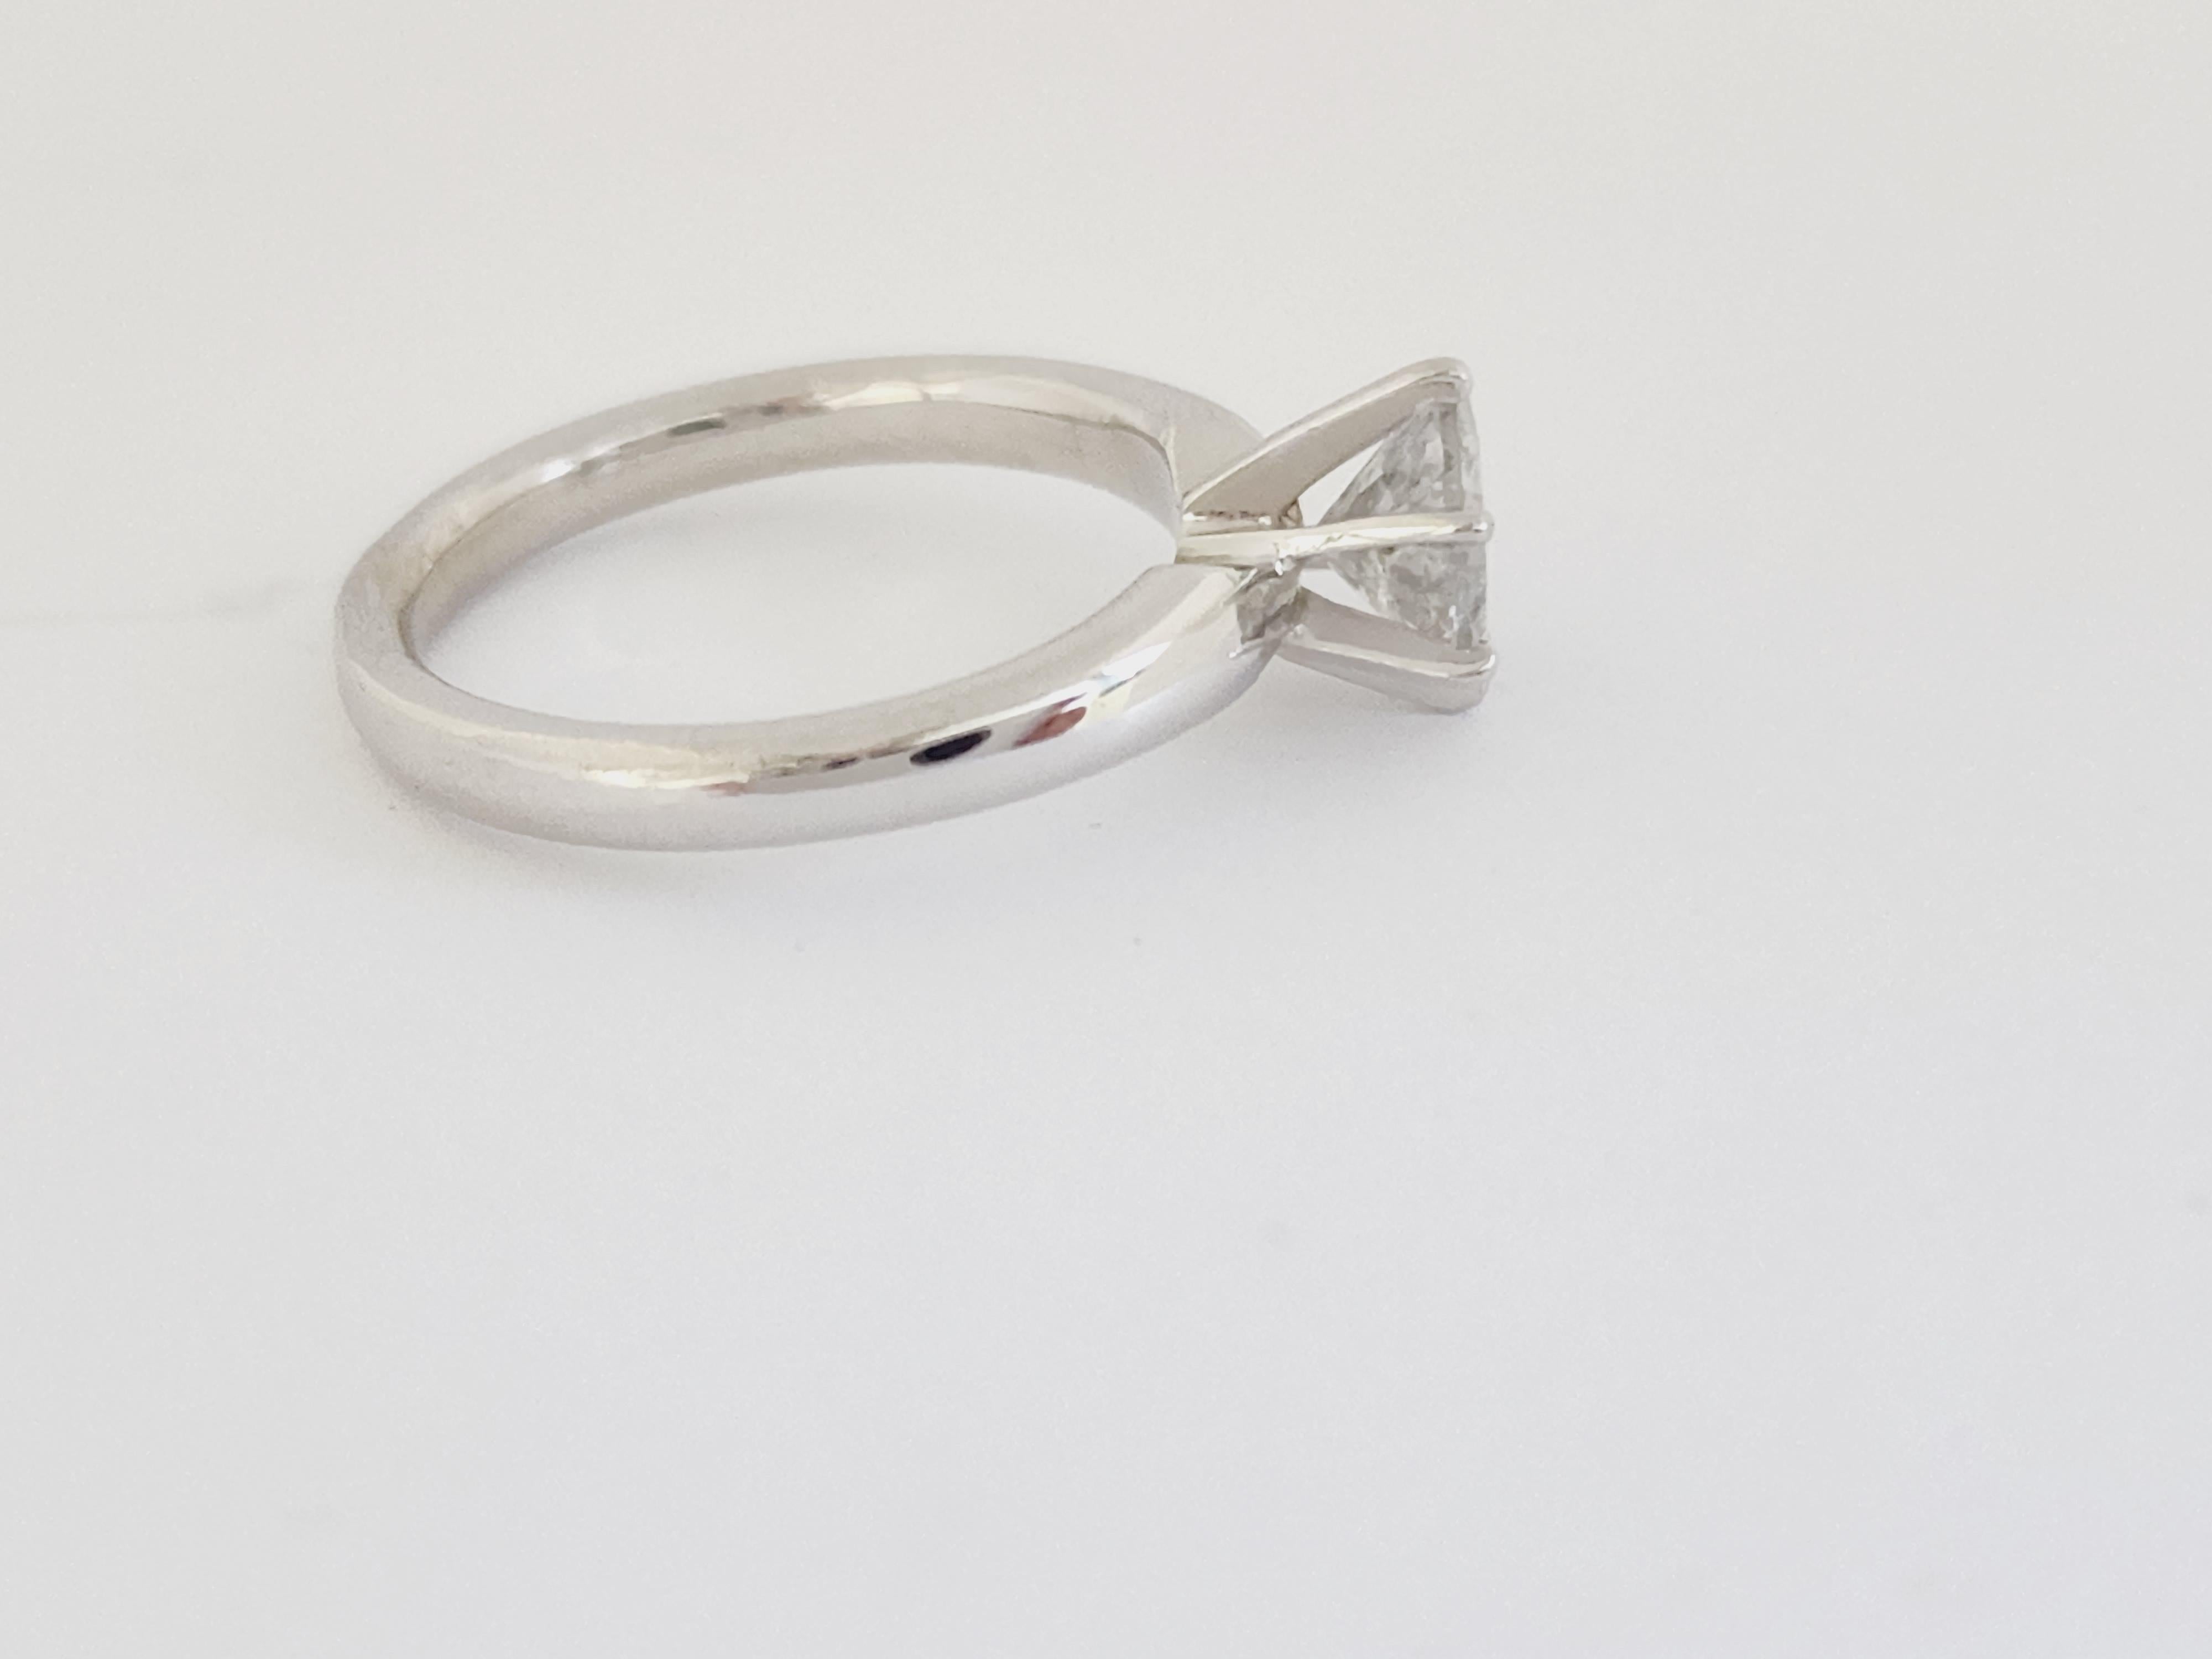 Natural GIA 1.11 Carat Gray Round Diamond Ring 14 Karat White Gold. Set on 6-prong 14K white gold ring.
Ring size: 6.5
Treated Clarity